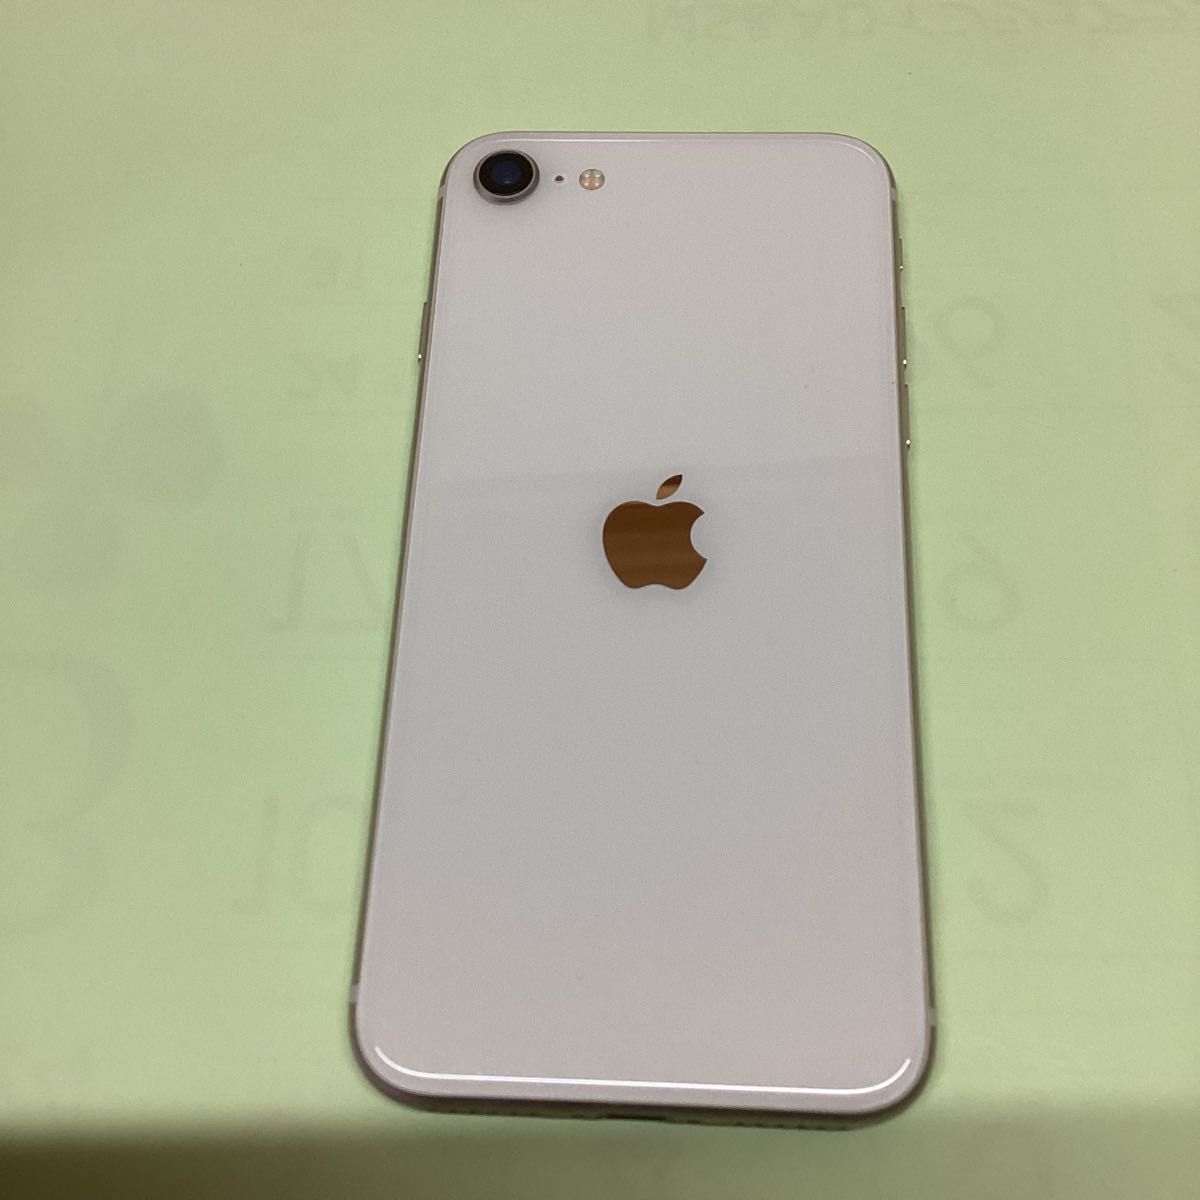 iPhone SE 64GB スターライト(ホワイト) 箱、充電ケーブルセット